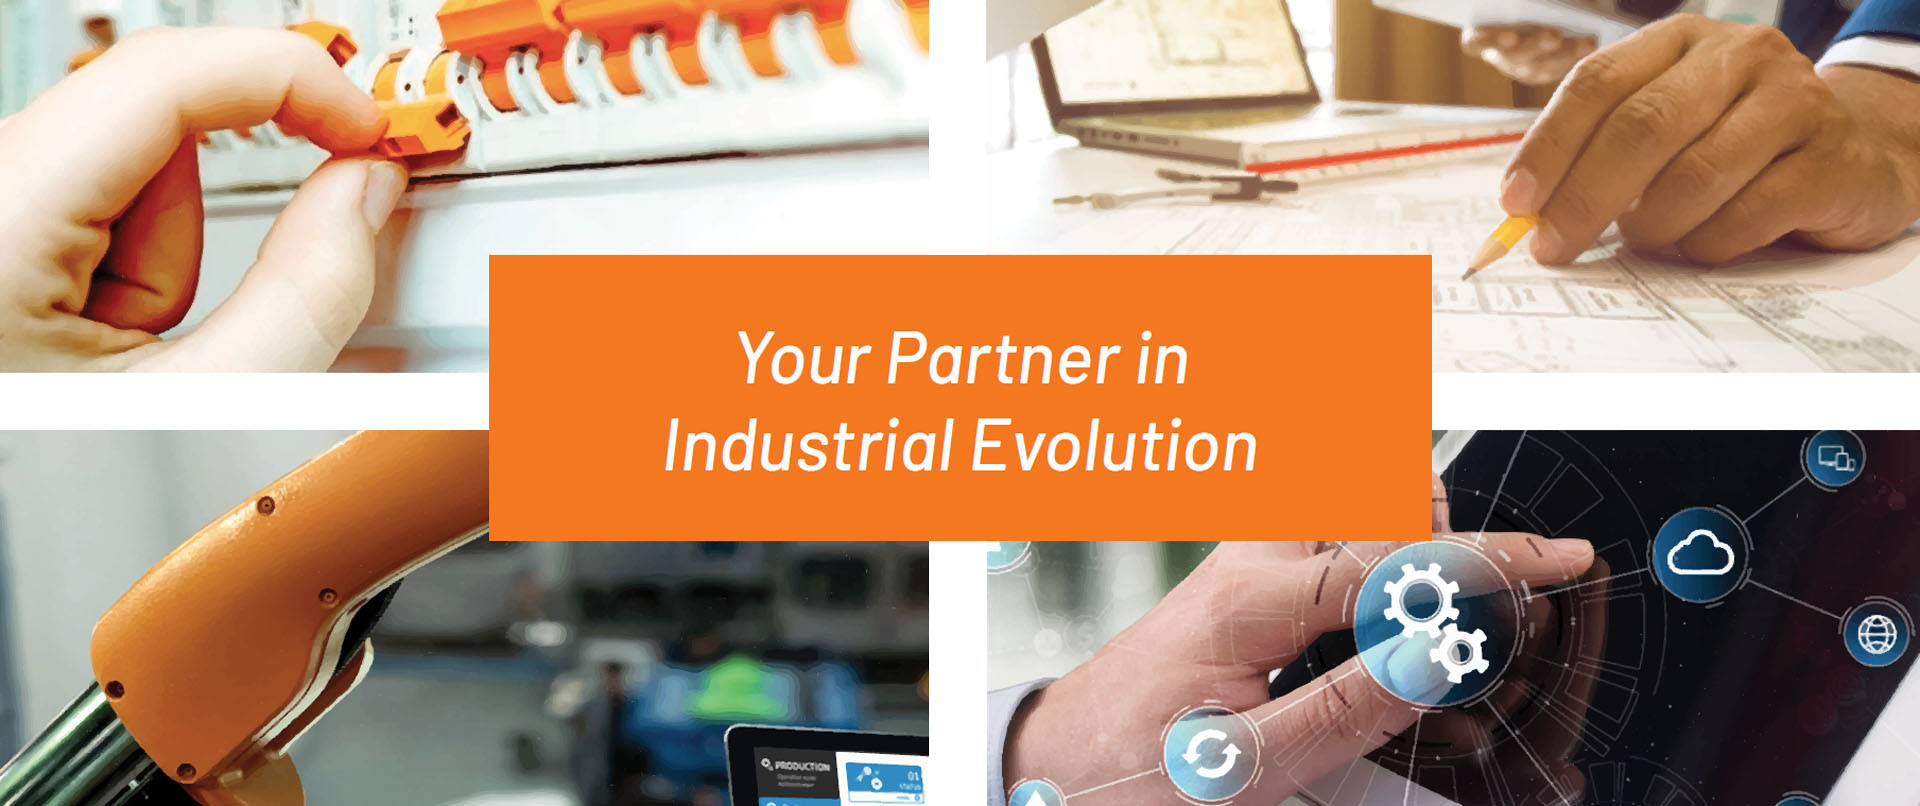 Your Partner in Industrial Evolution